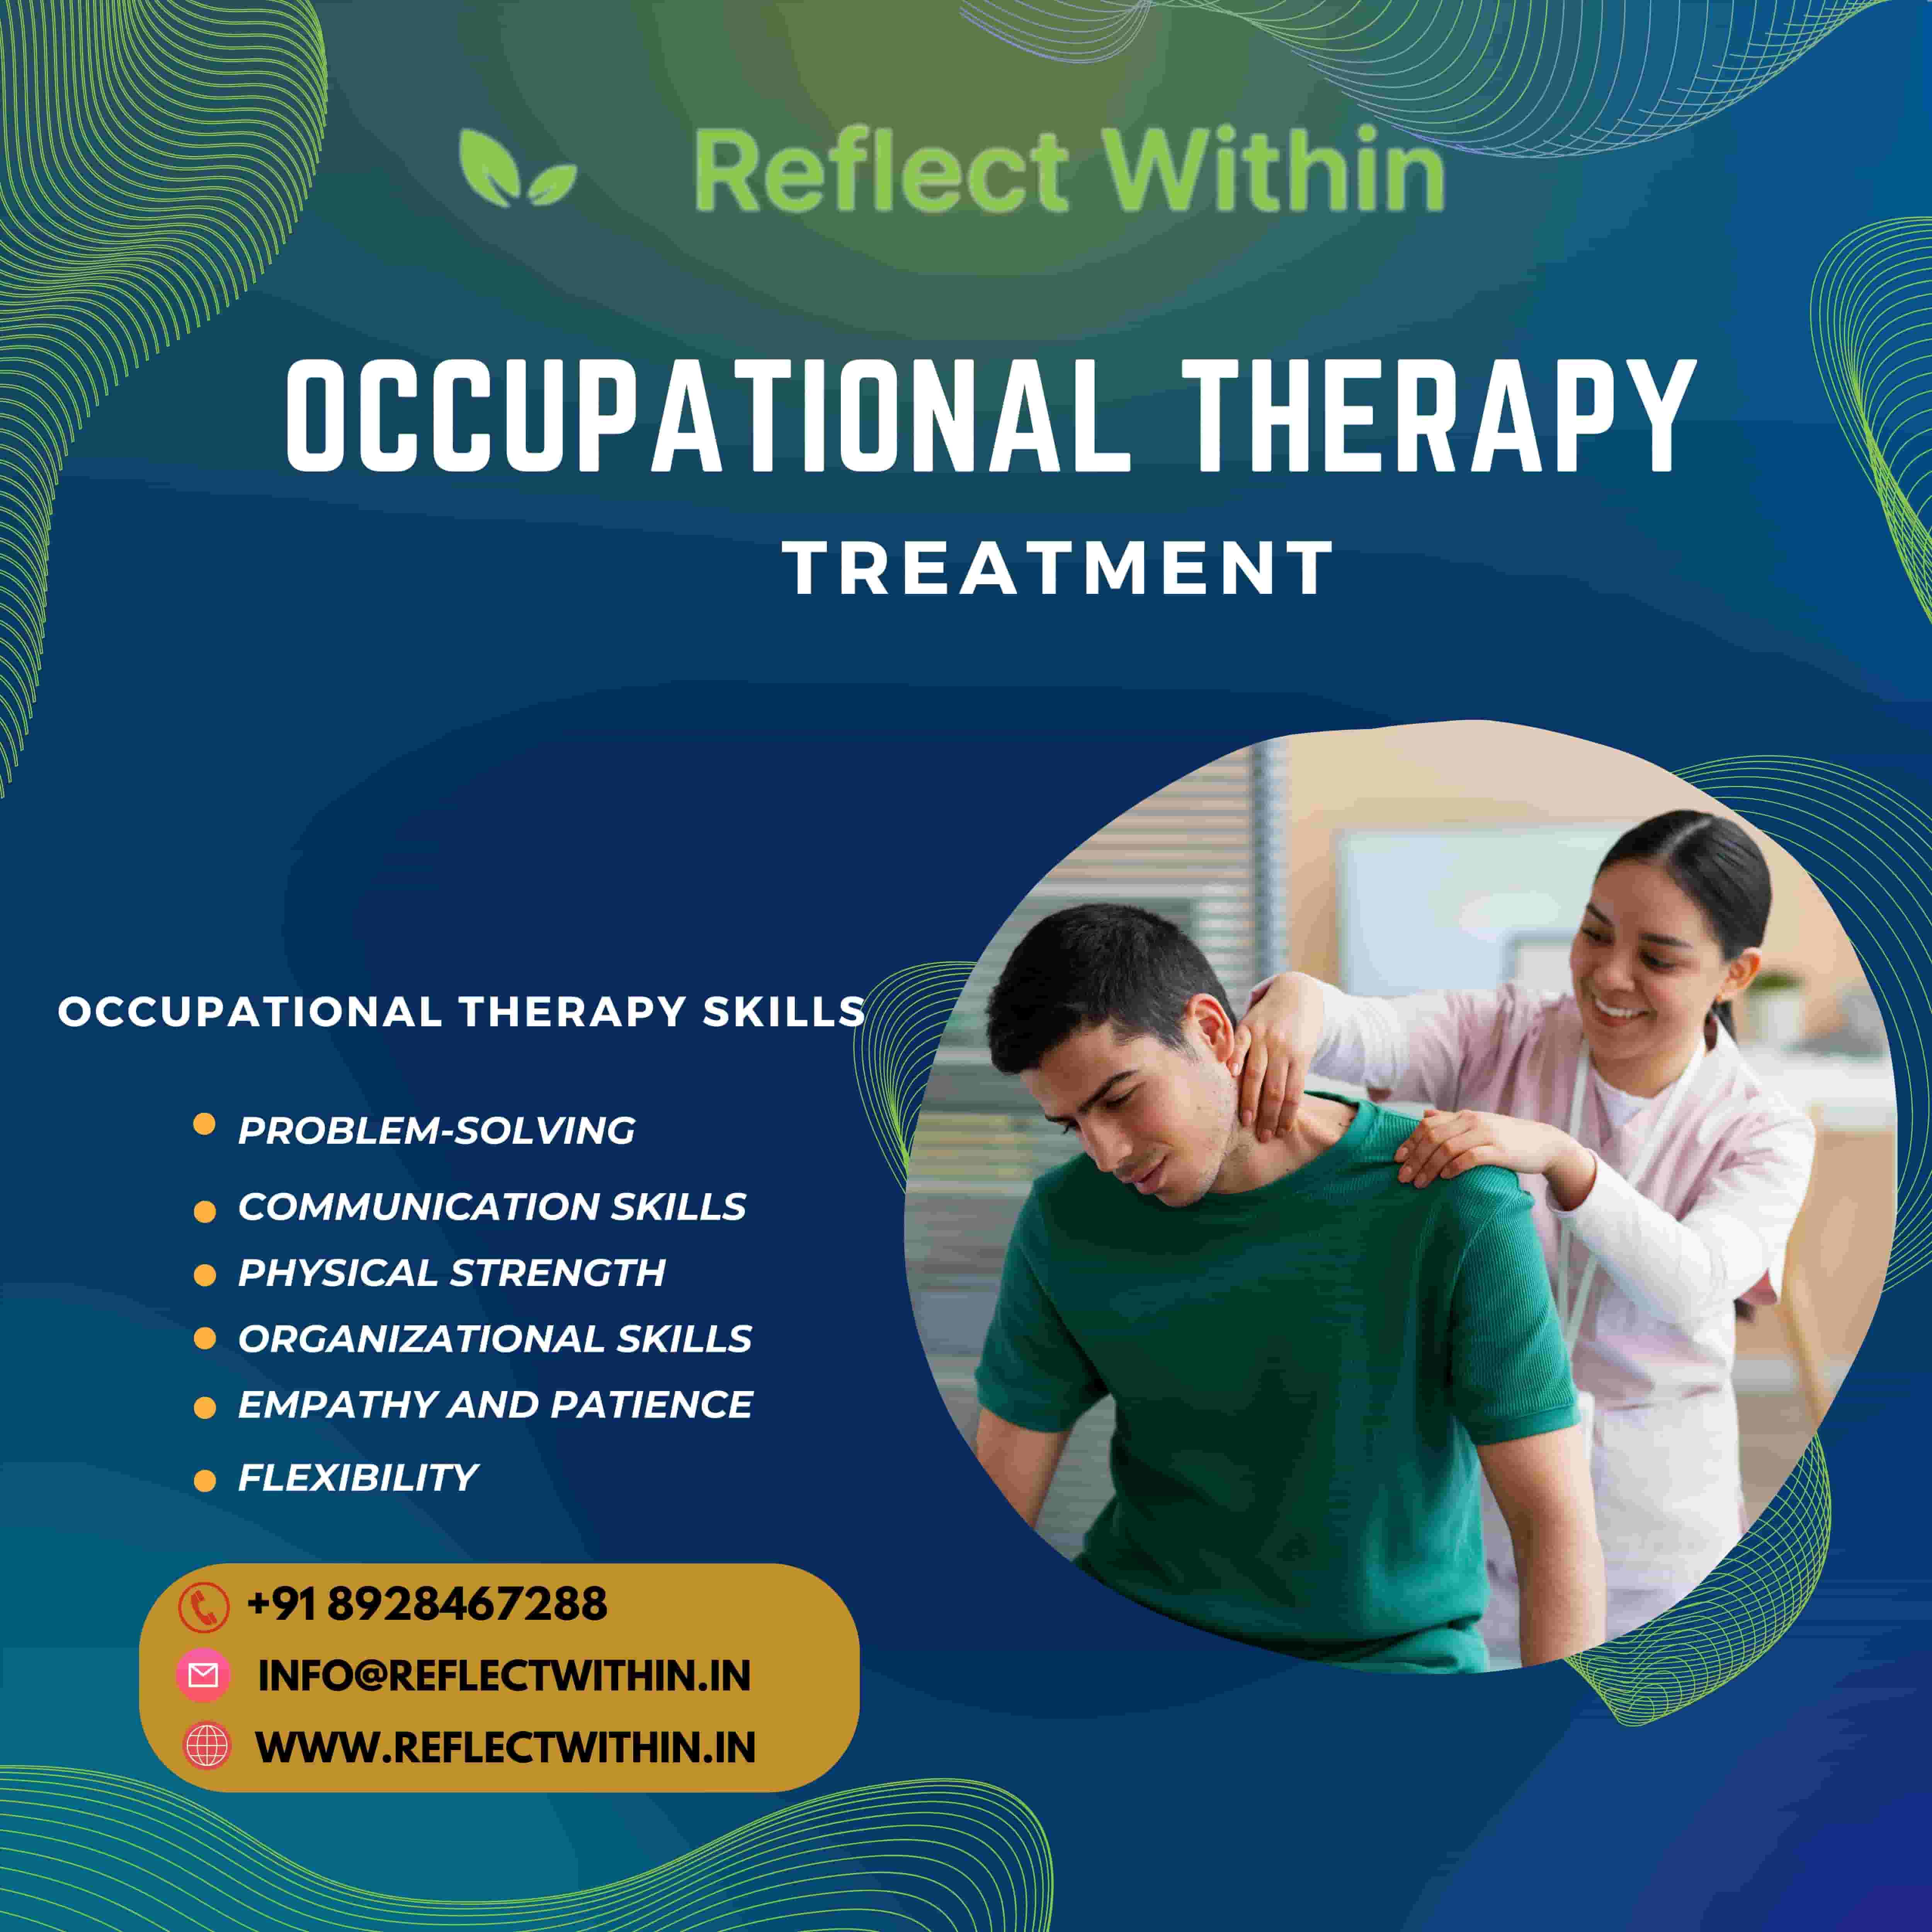 Best Pediatric Occupational Therapist near me - Mumbai Health, Personal Trainer